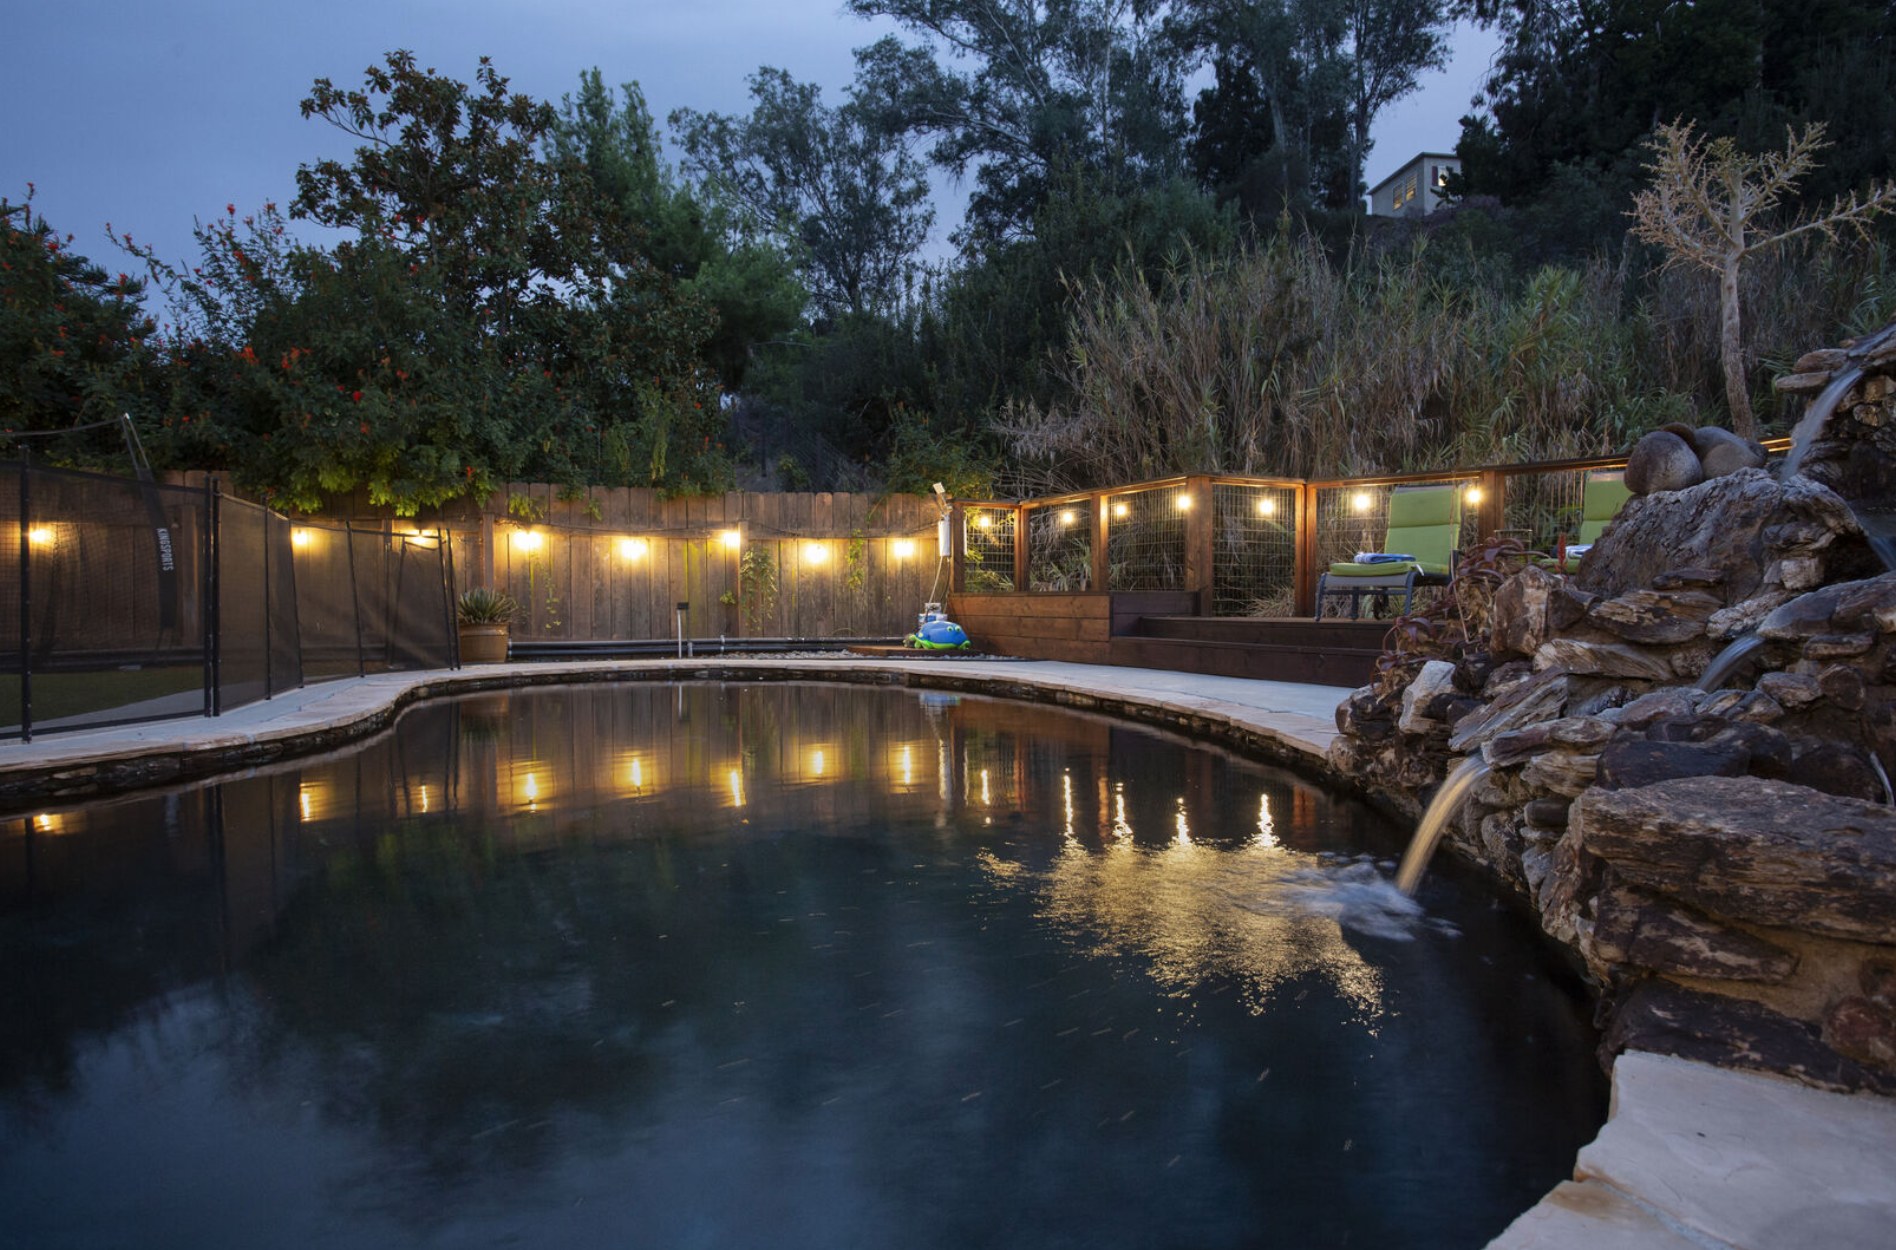 San Diego rental with a pool